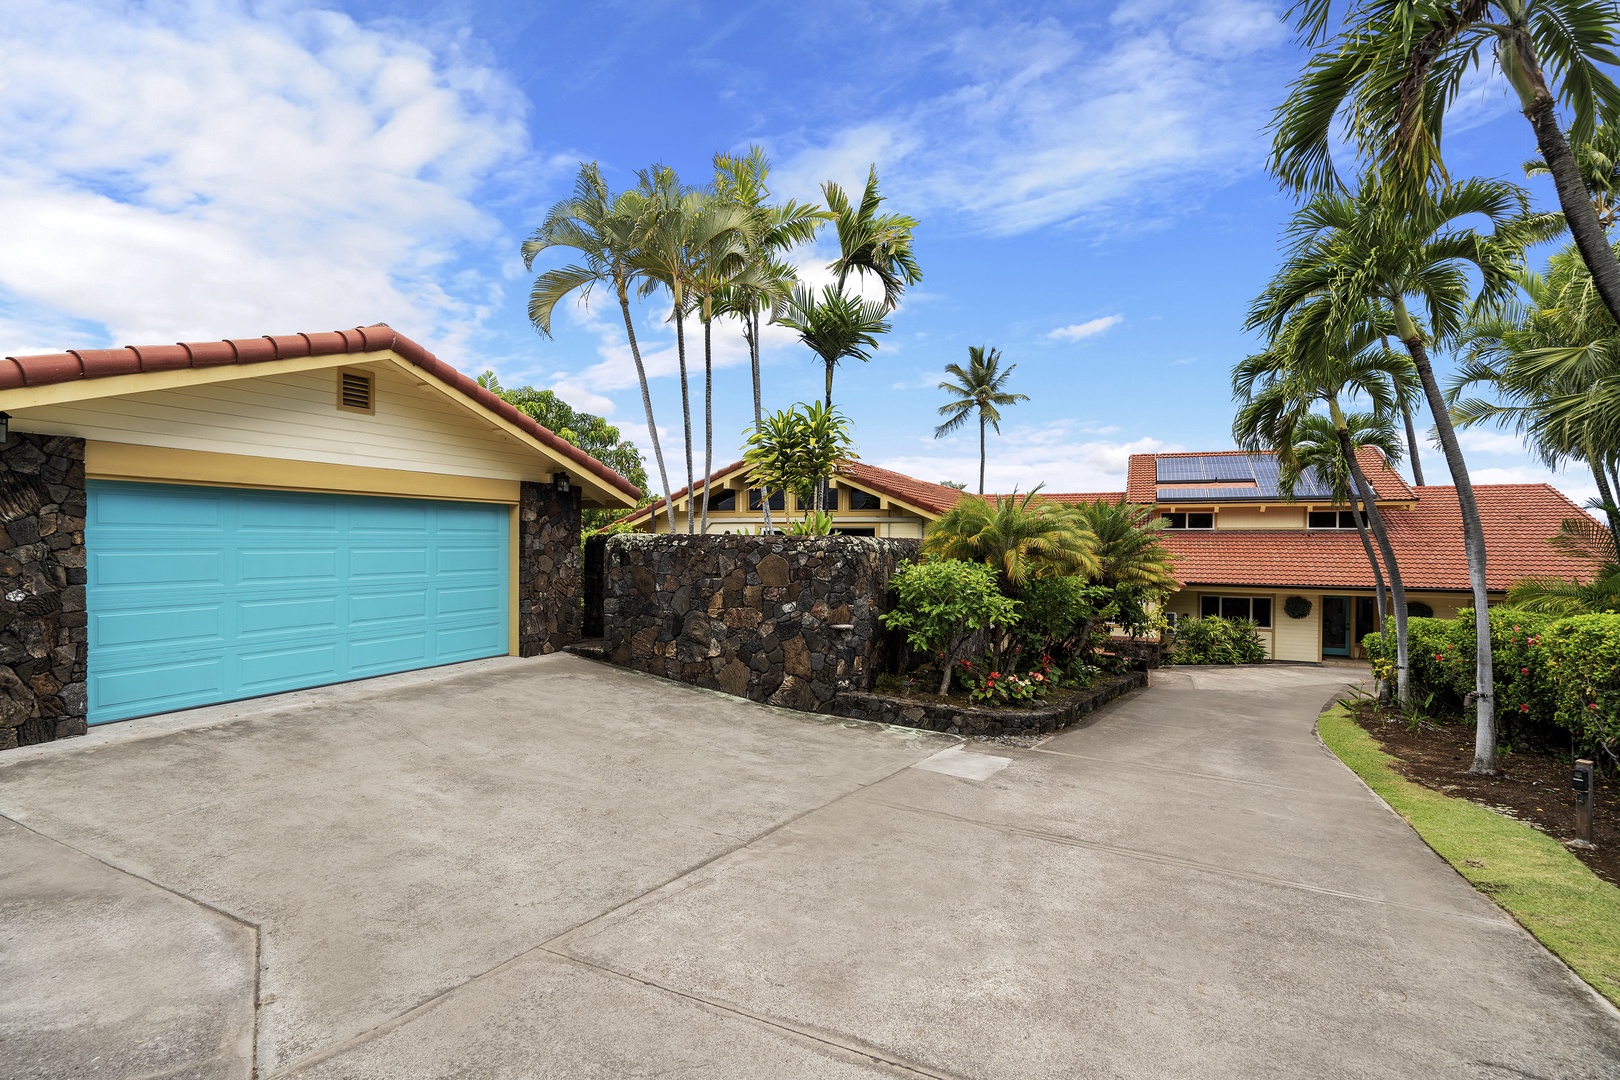 Kailua Kona Vacation Rentals, Hale Pua - (Garage inaccessible to guests)